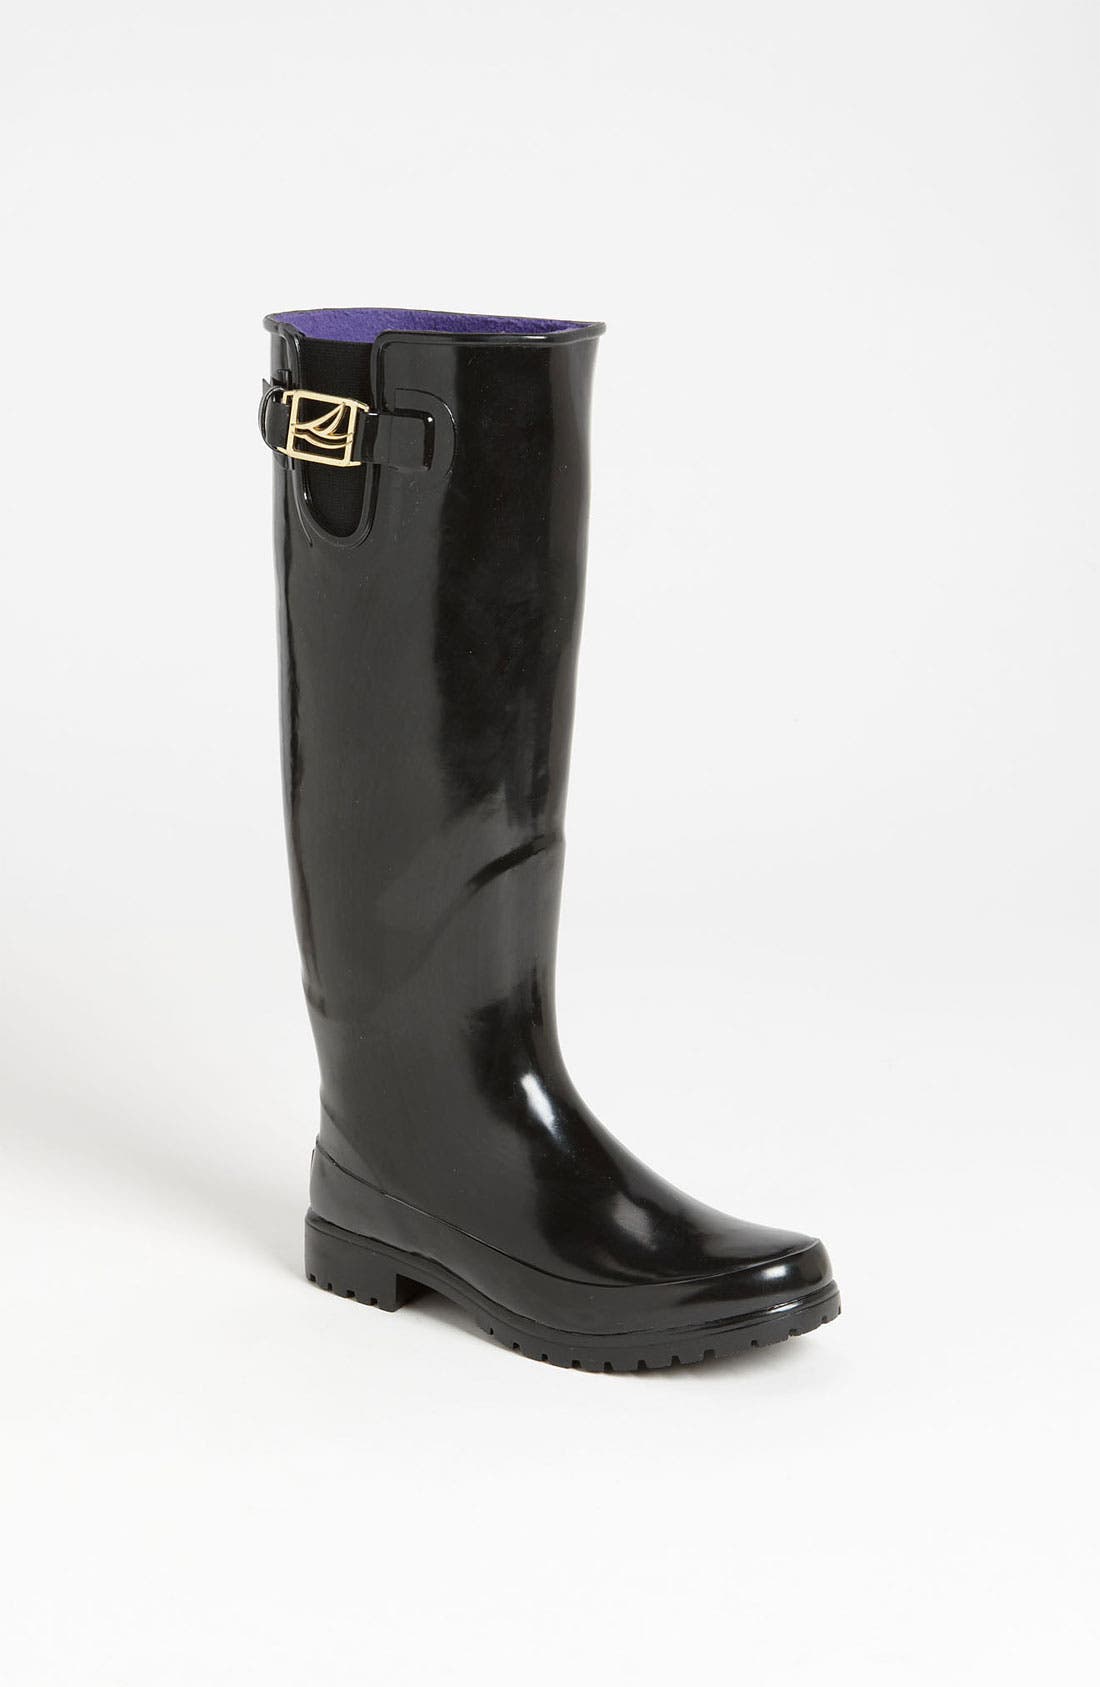 sperry top sider women's rain boots